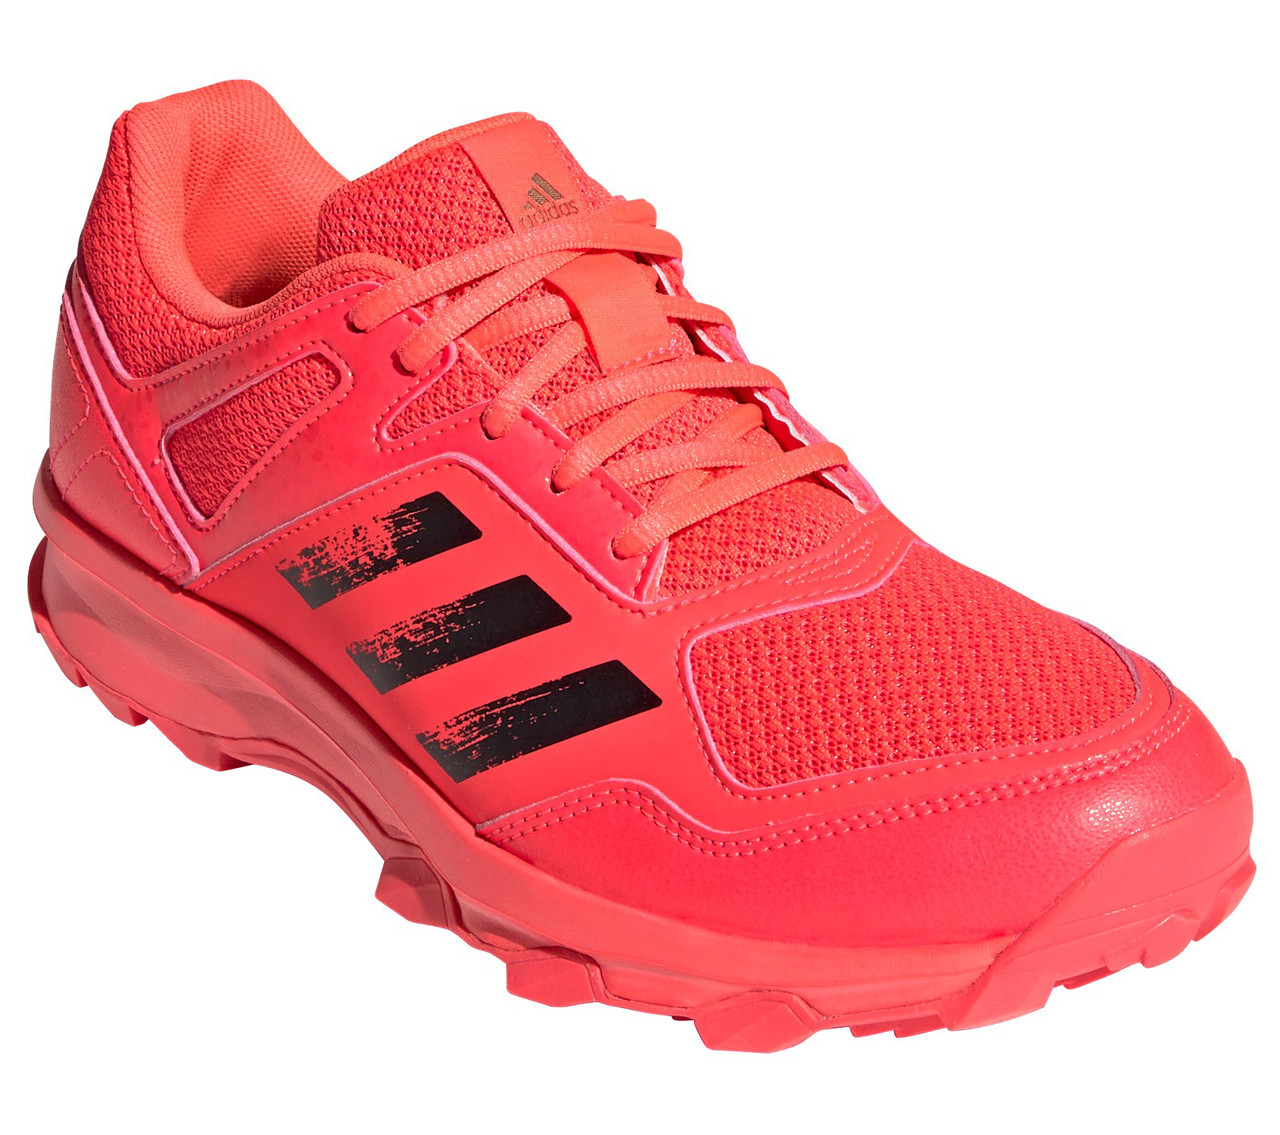 2020/21 Adidas Adipower Hockey Shoes - Pink/Black